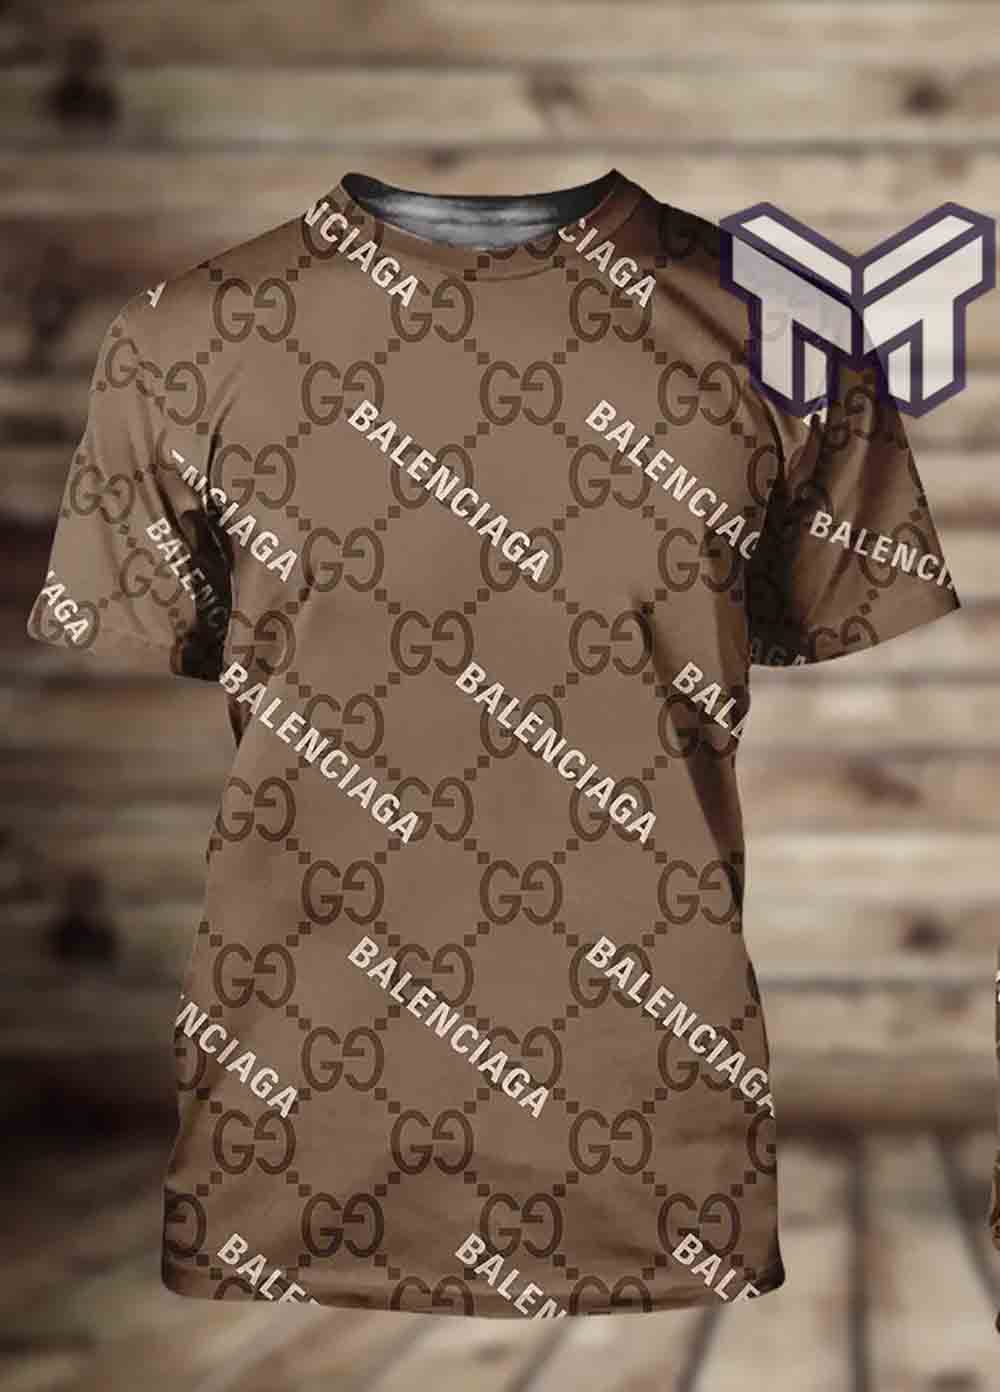 Gucci Balenciaga Brown Luxury Brand T-Shirt Outfir For Men Women